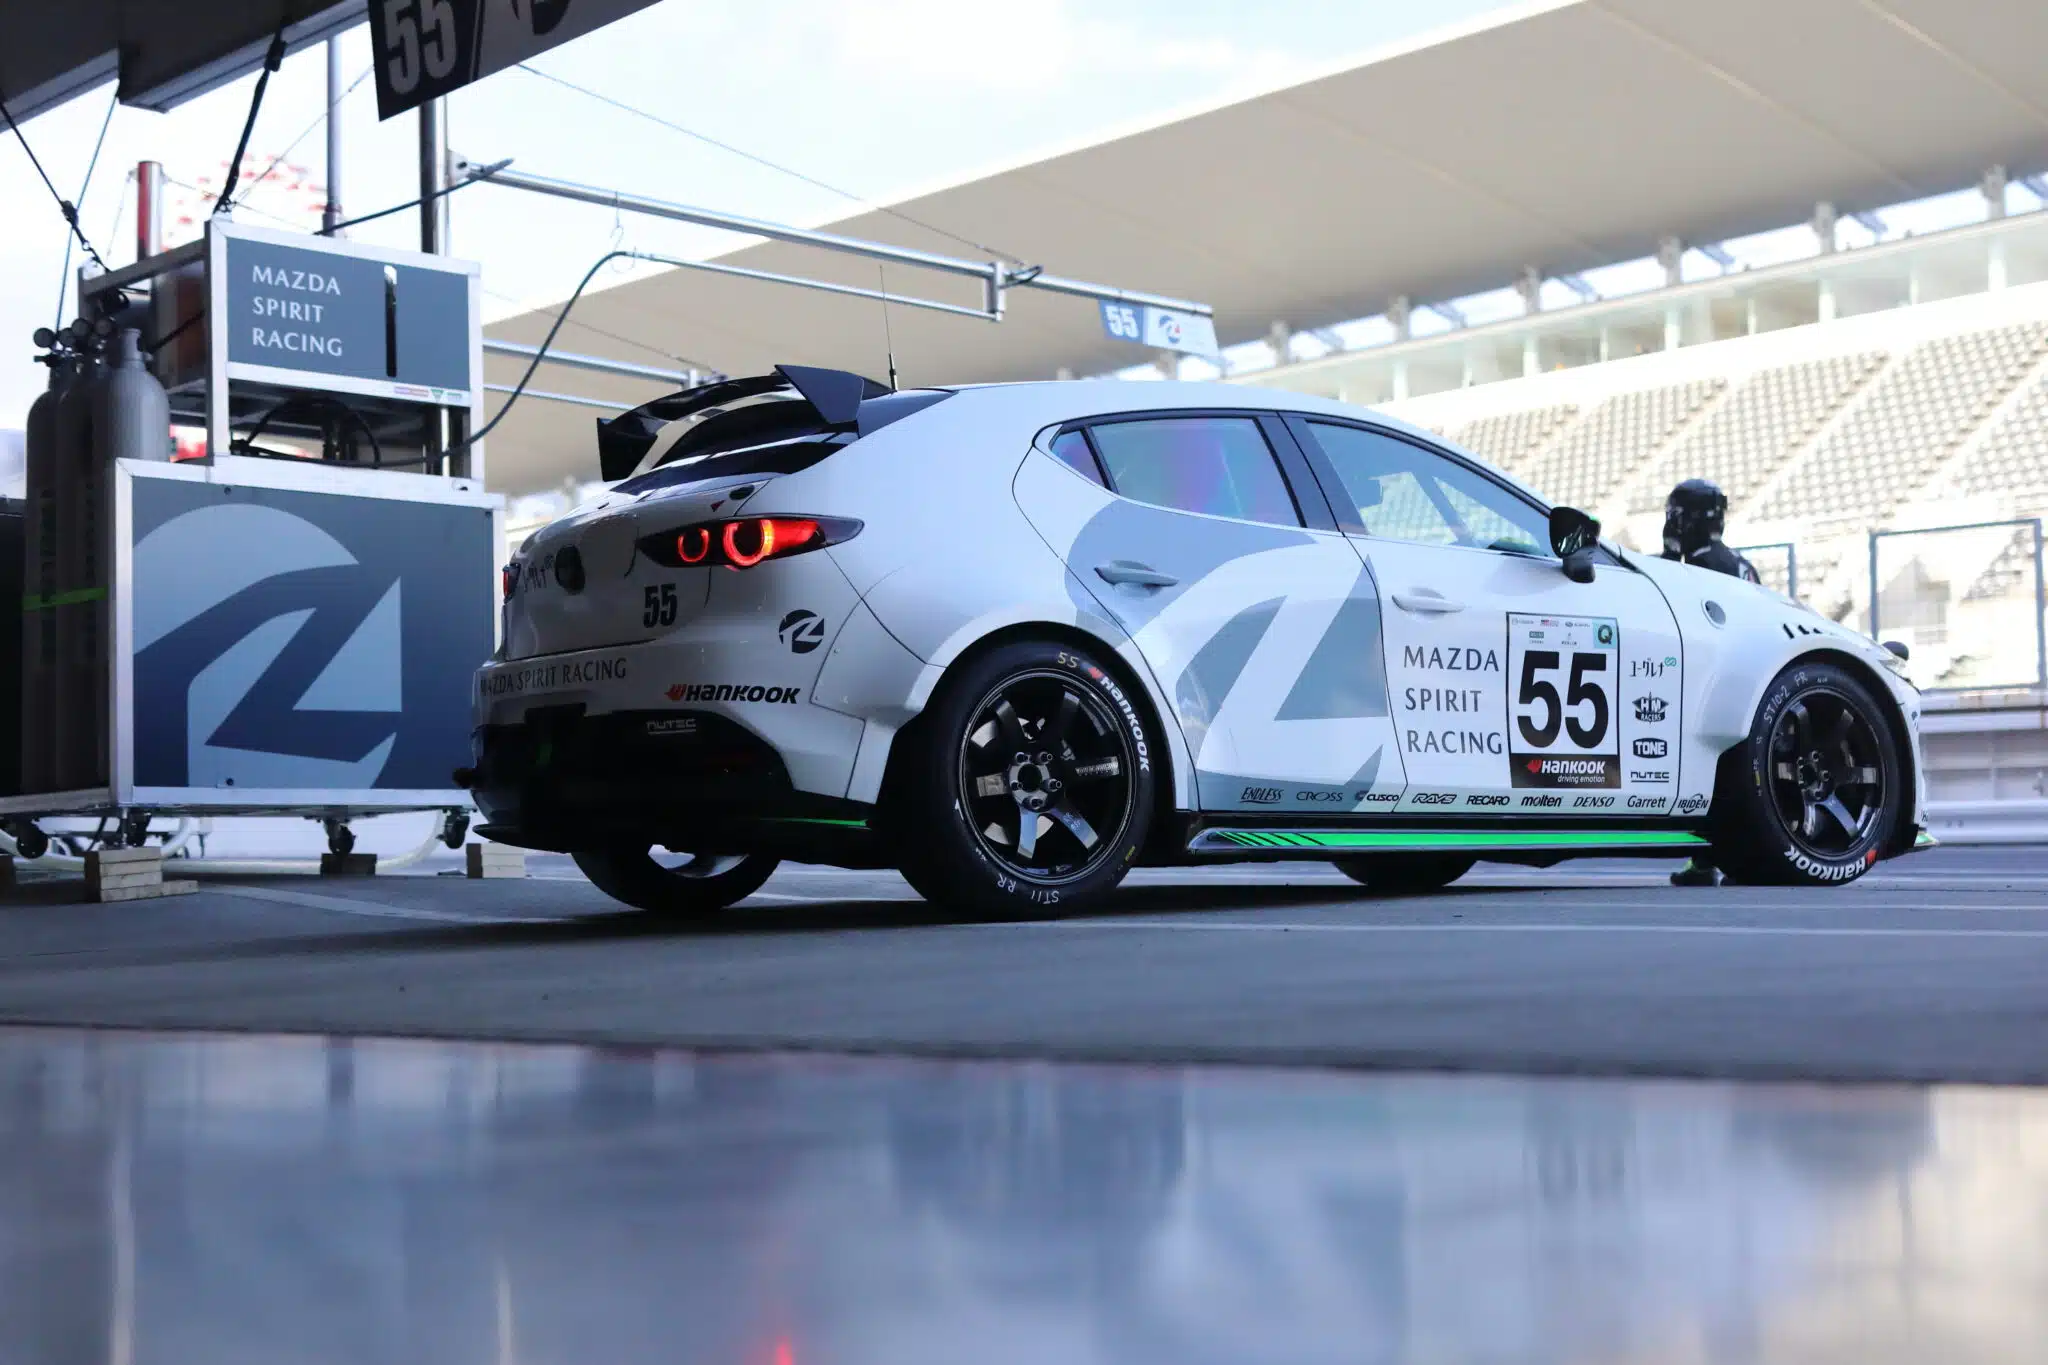 Mazda Spirit Racing’s Mazda3 Bio concept car 